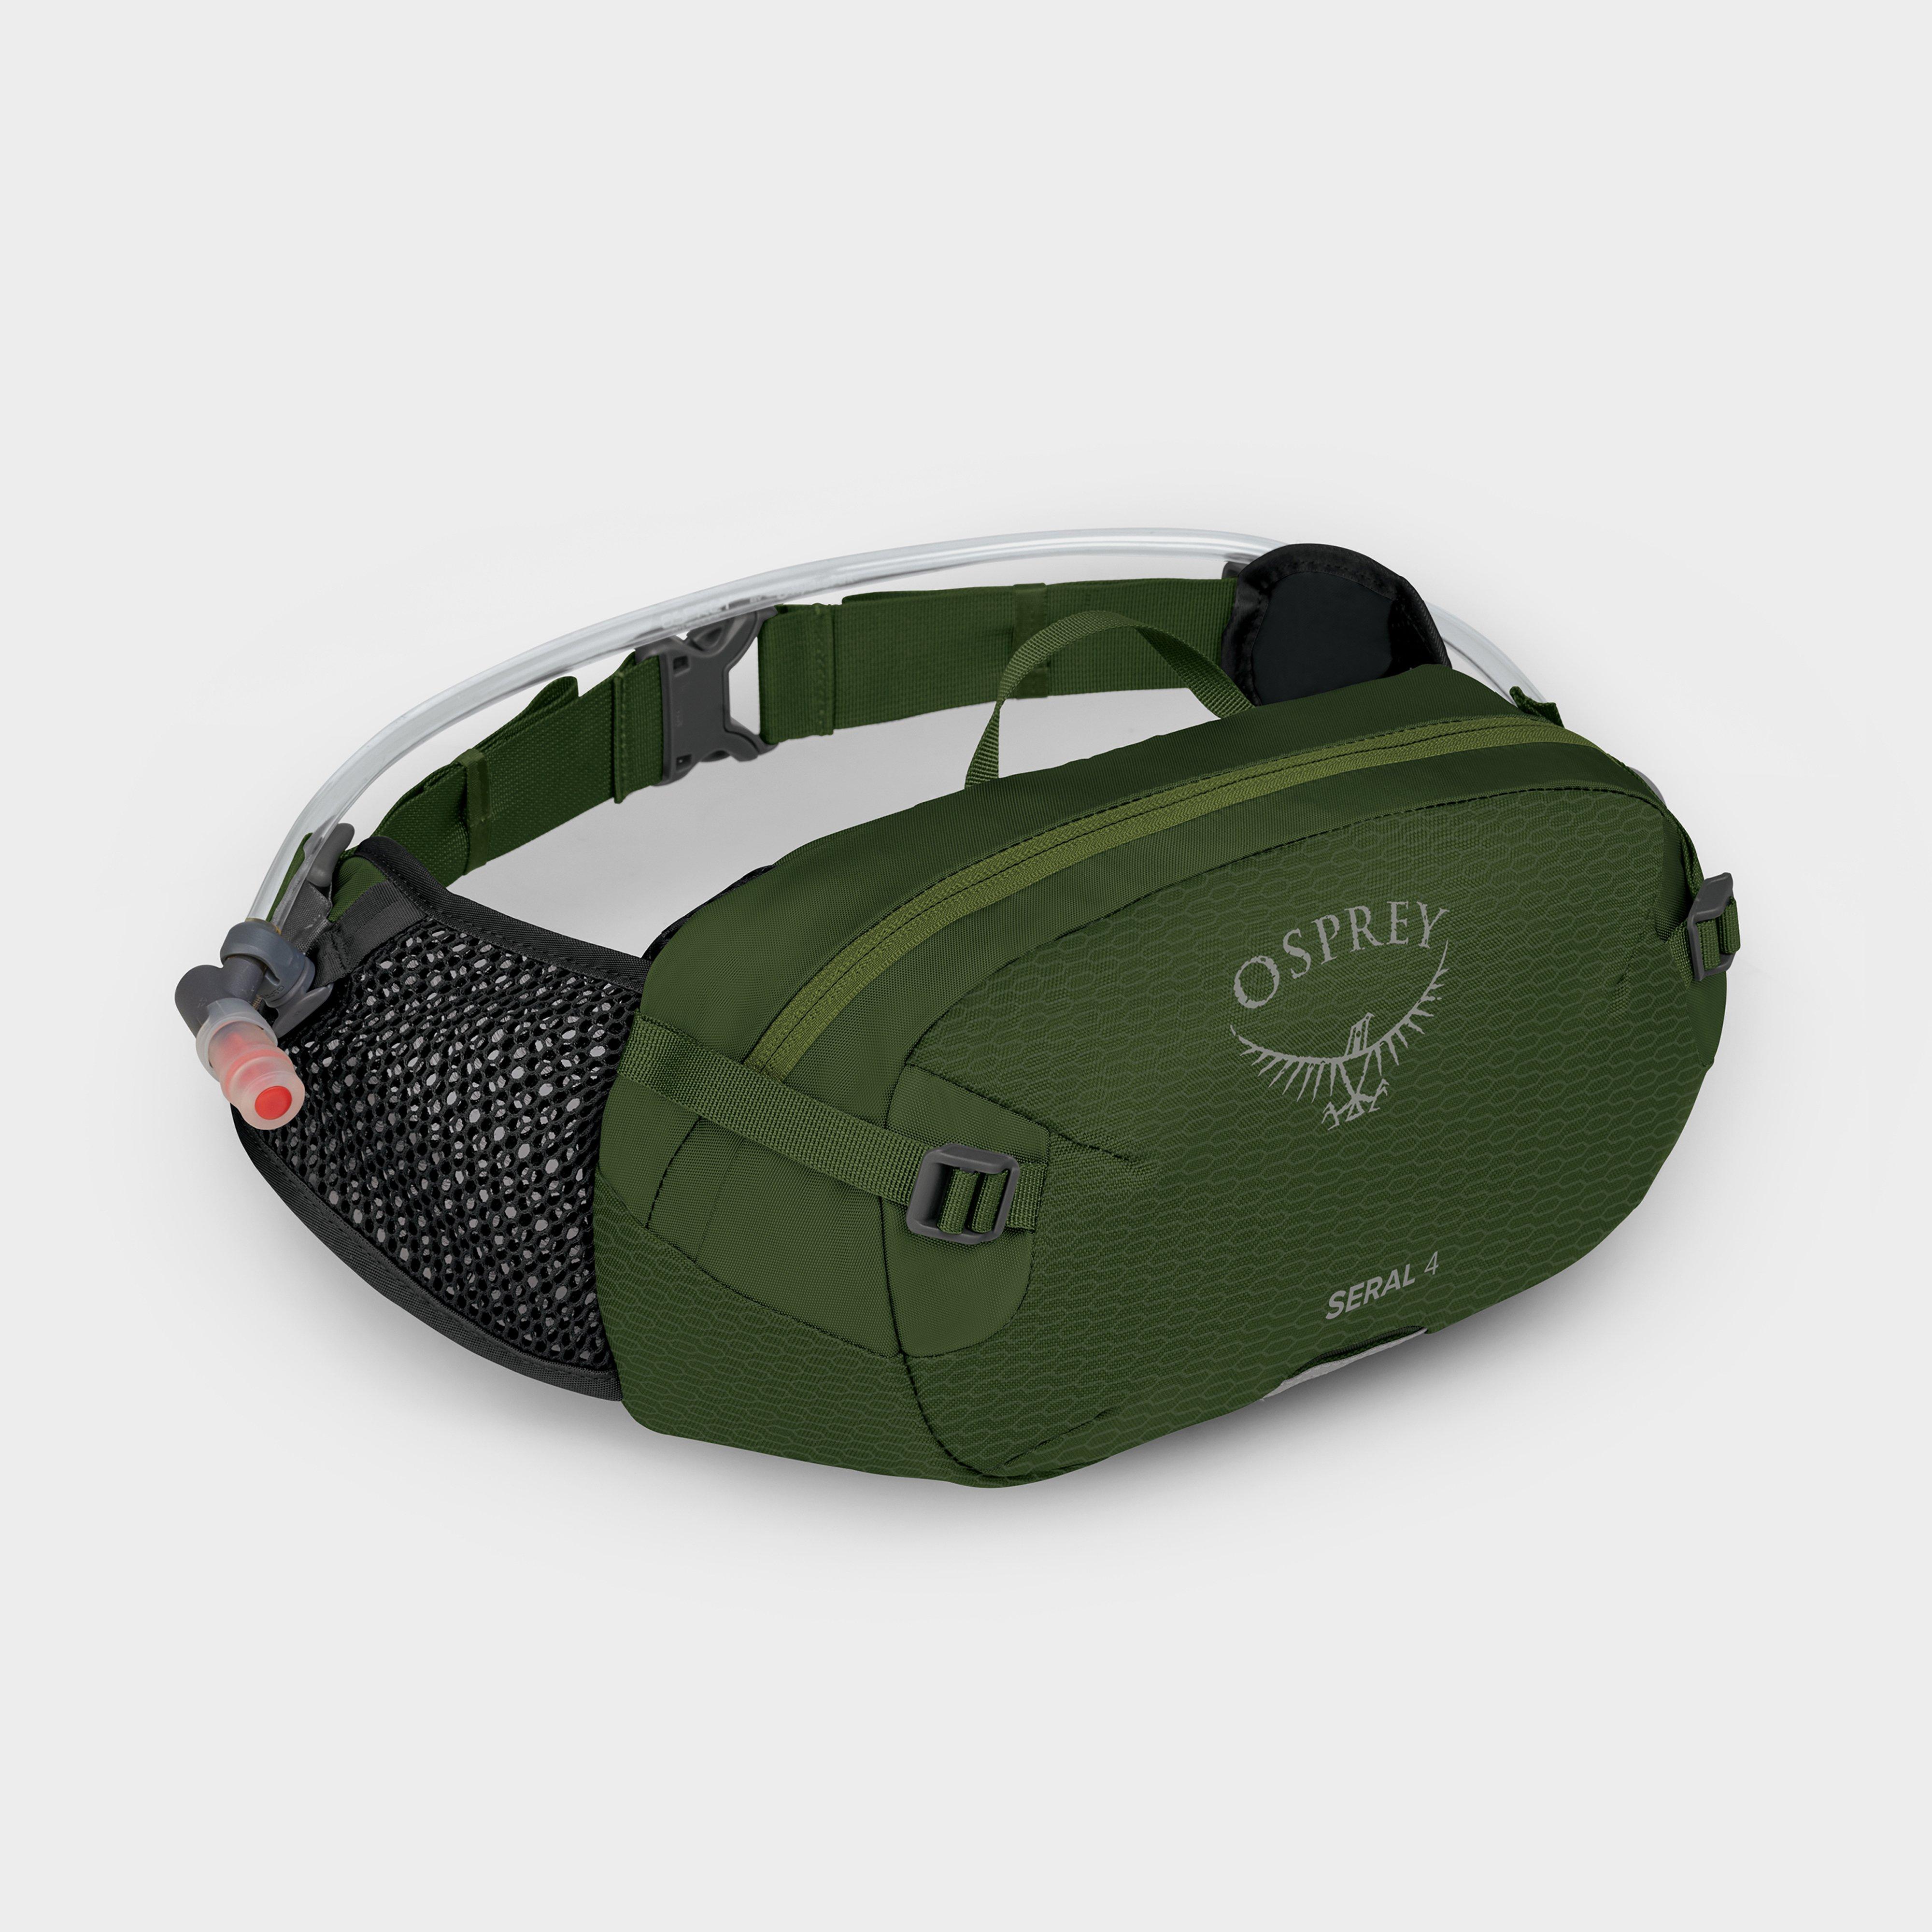 Osprey Seral 4 Hydration Pack - Green/green  Green/green